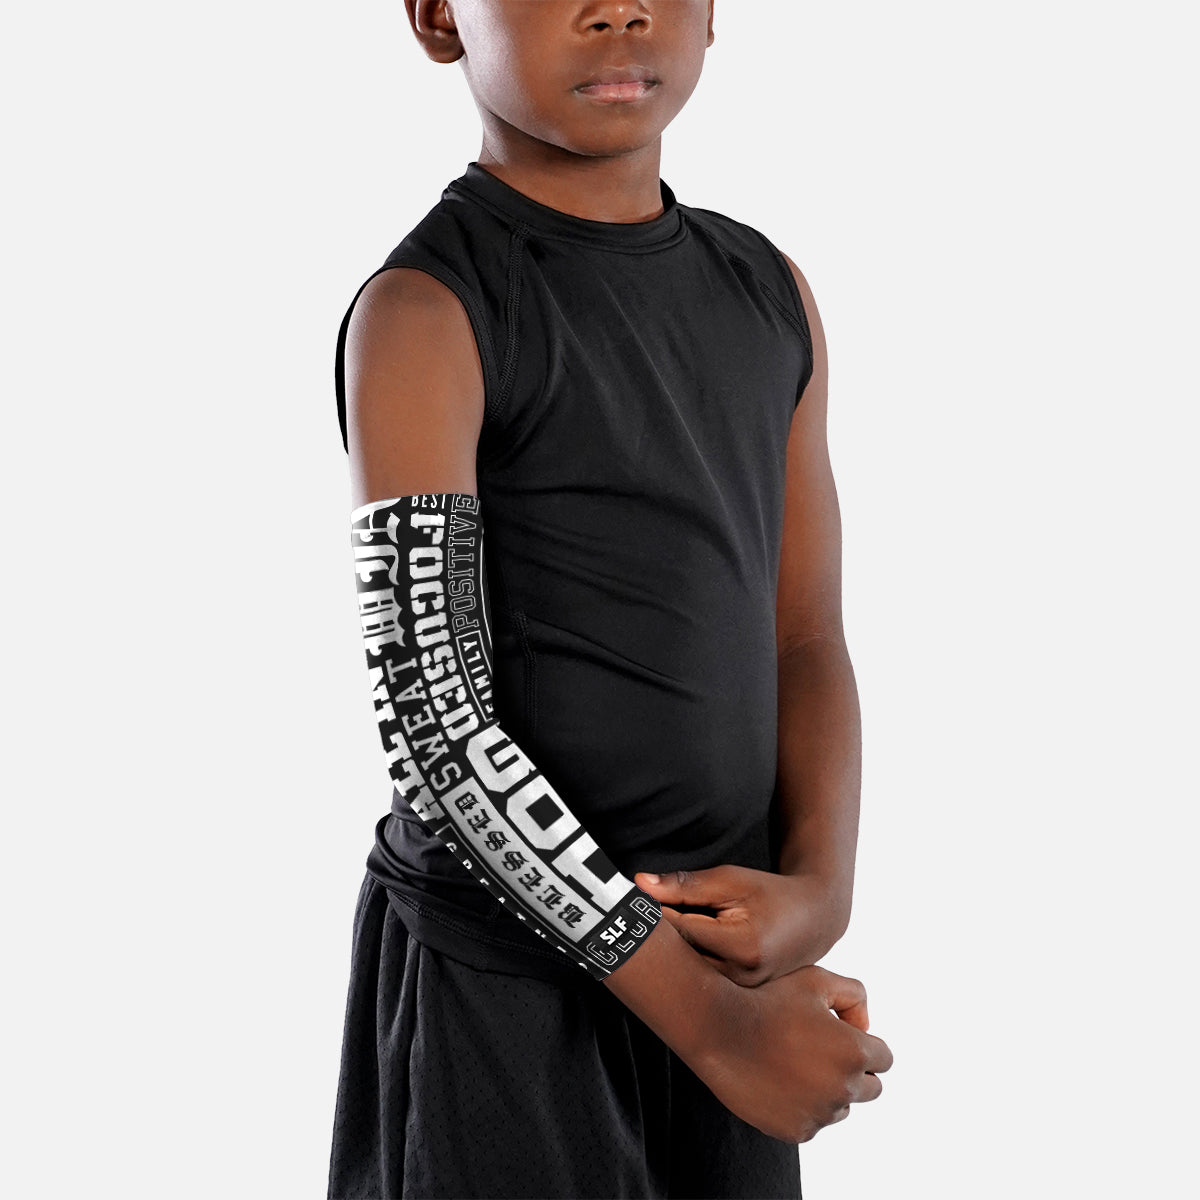 Inspirational Black Kids Arm Sleeve